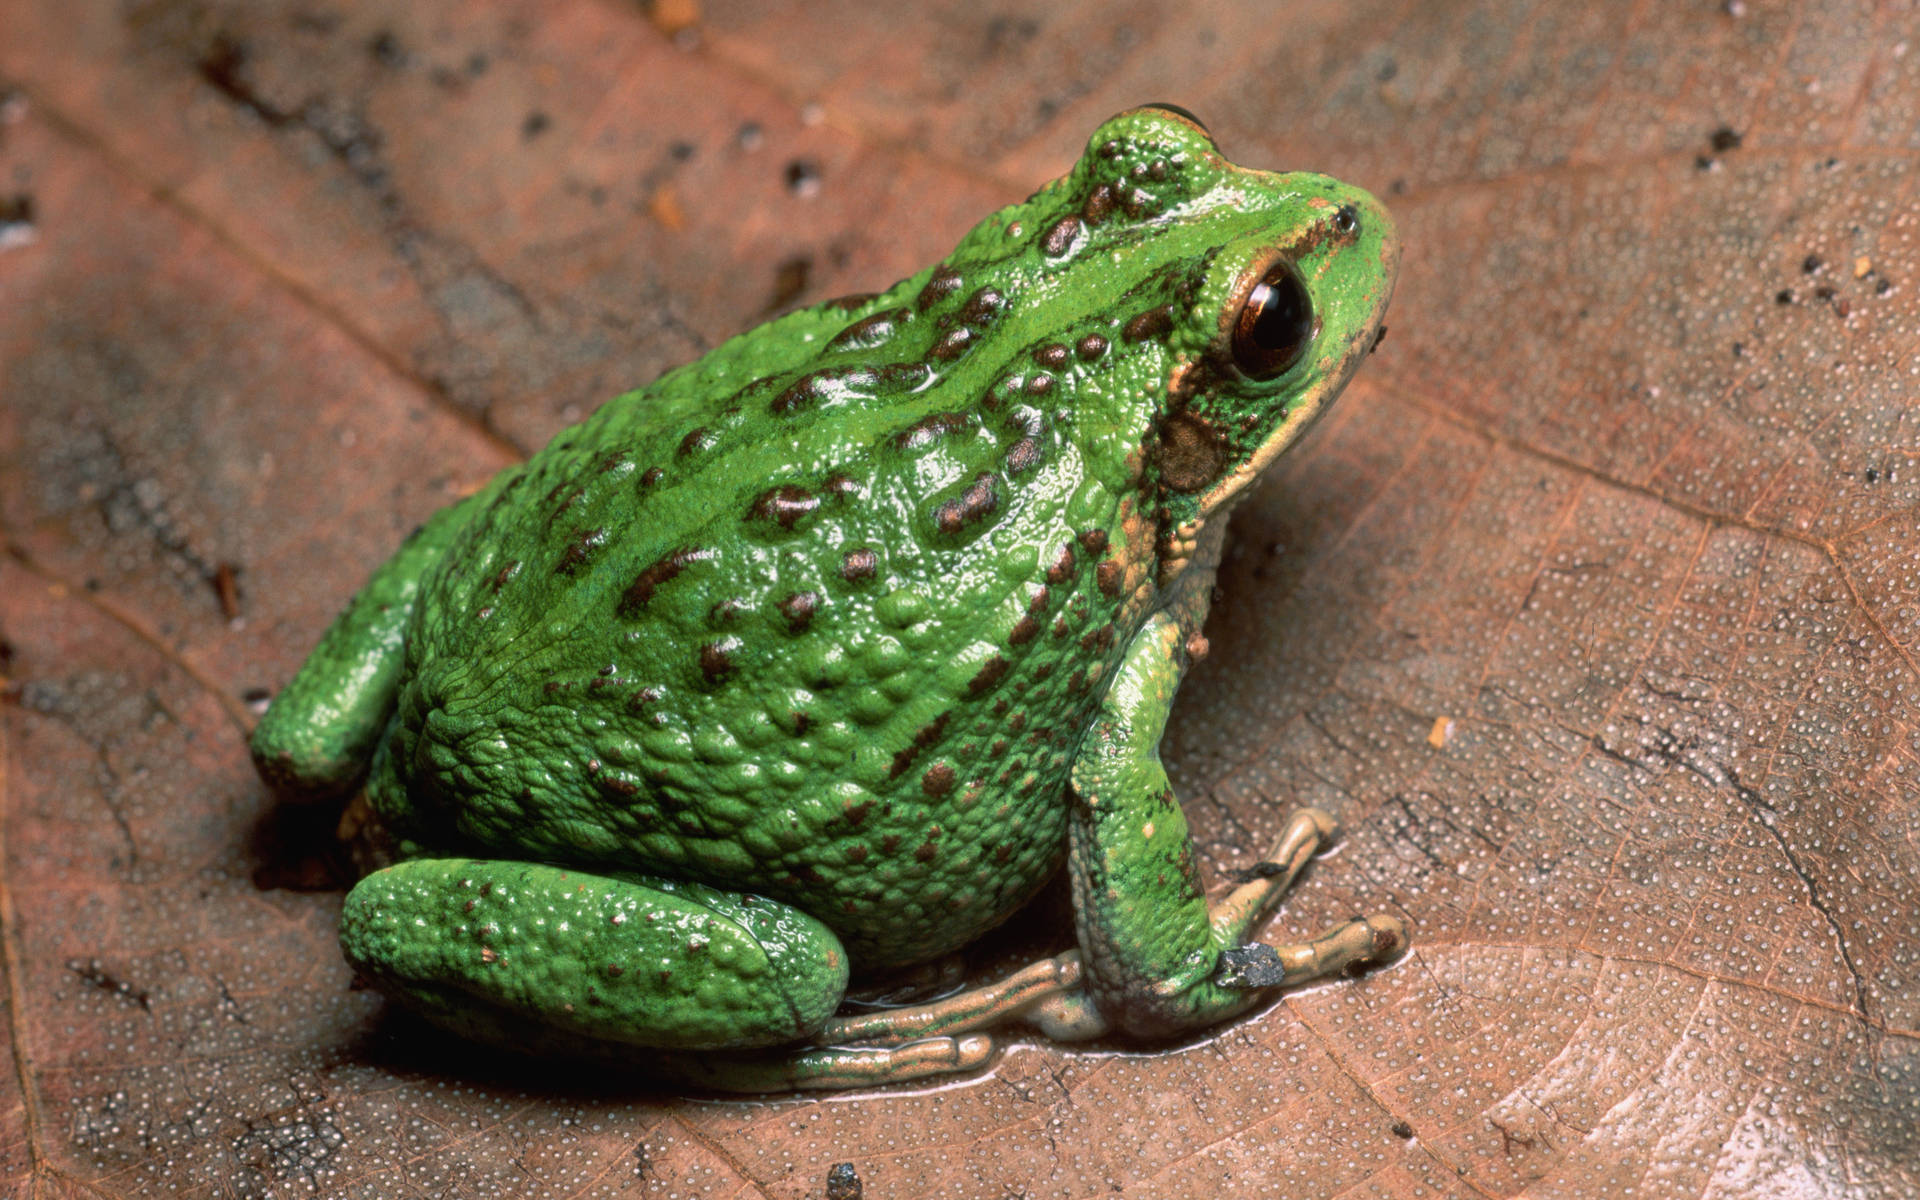 Cute Frog With Bumpy Green Skin